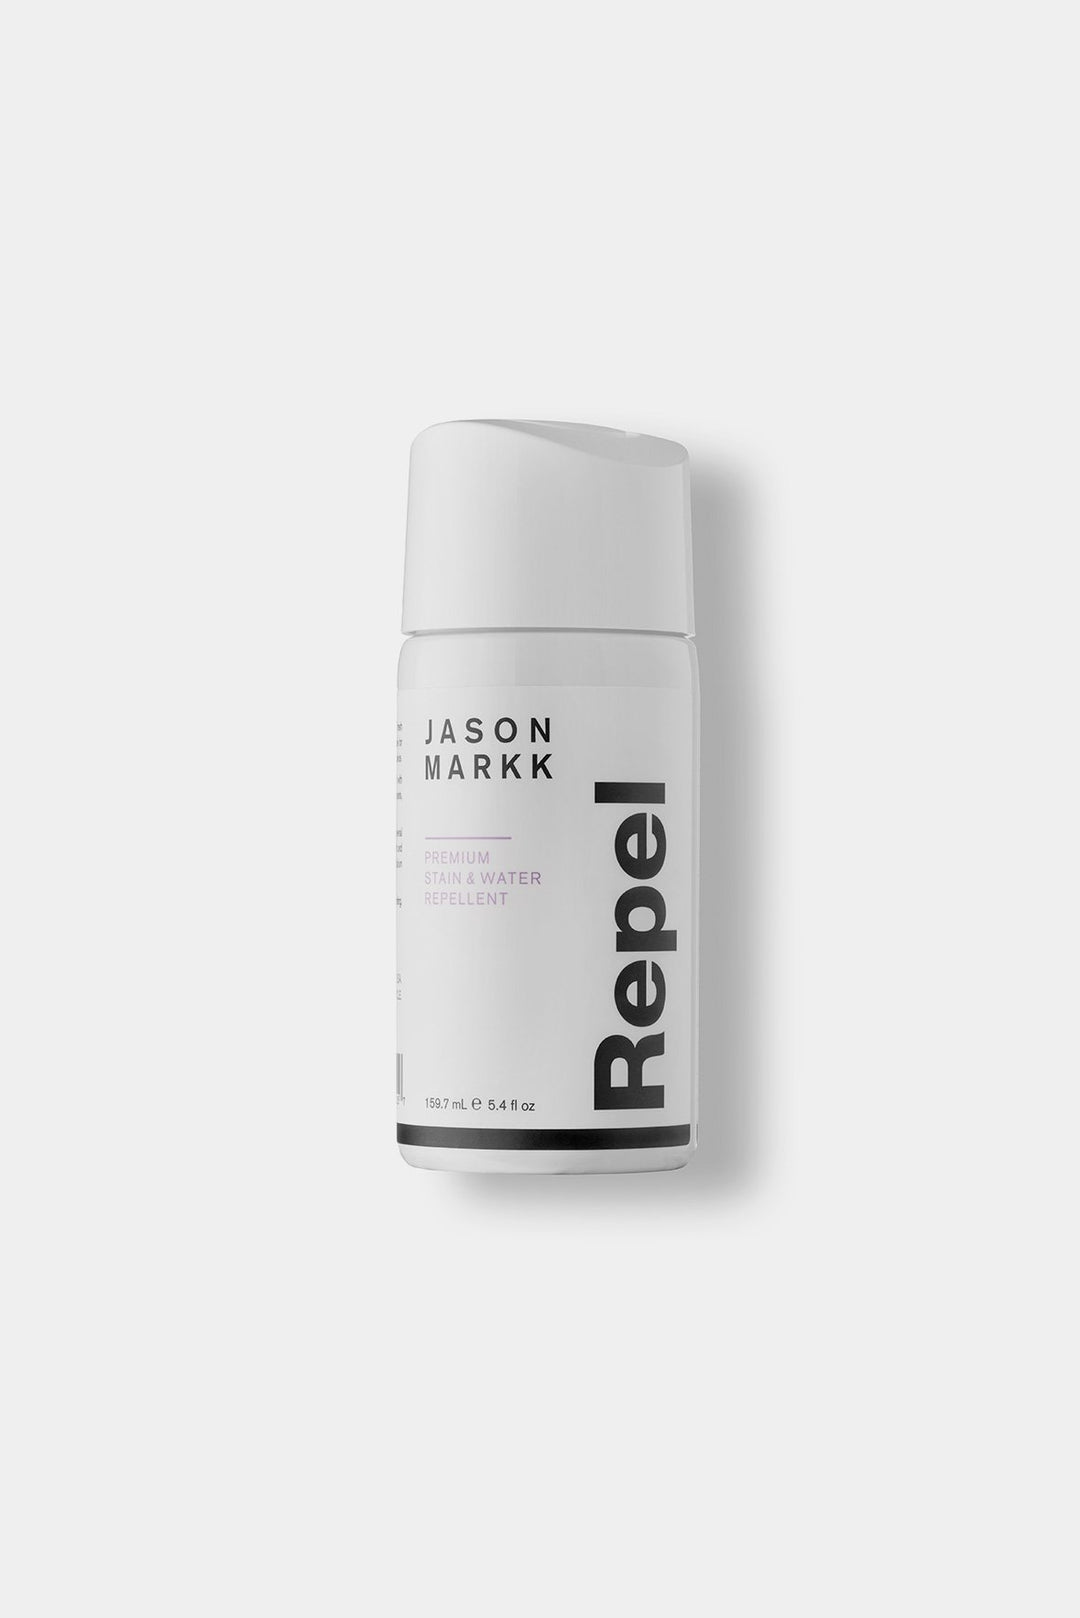 Jason Markk Repel Spray  5.4OZ  ( Refill )